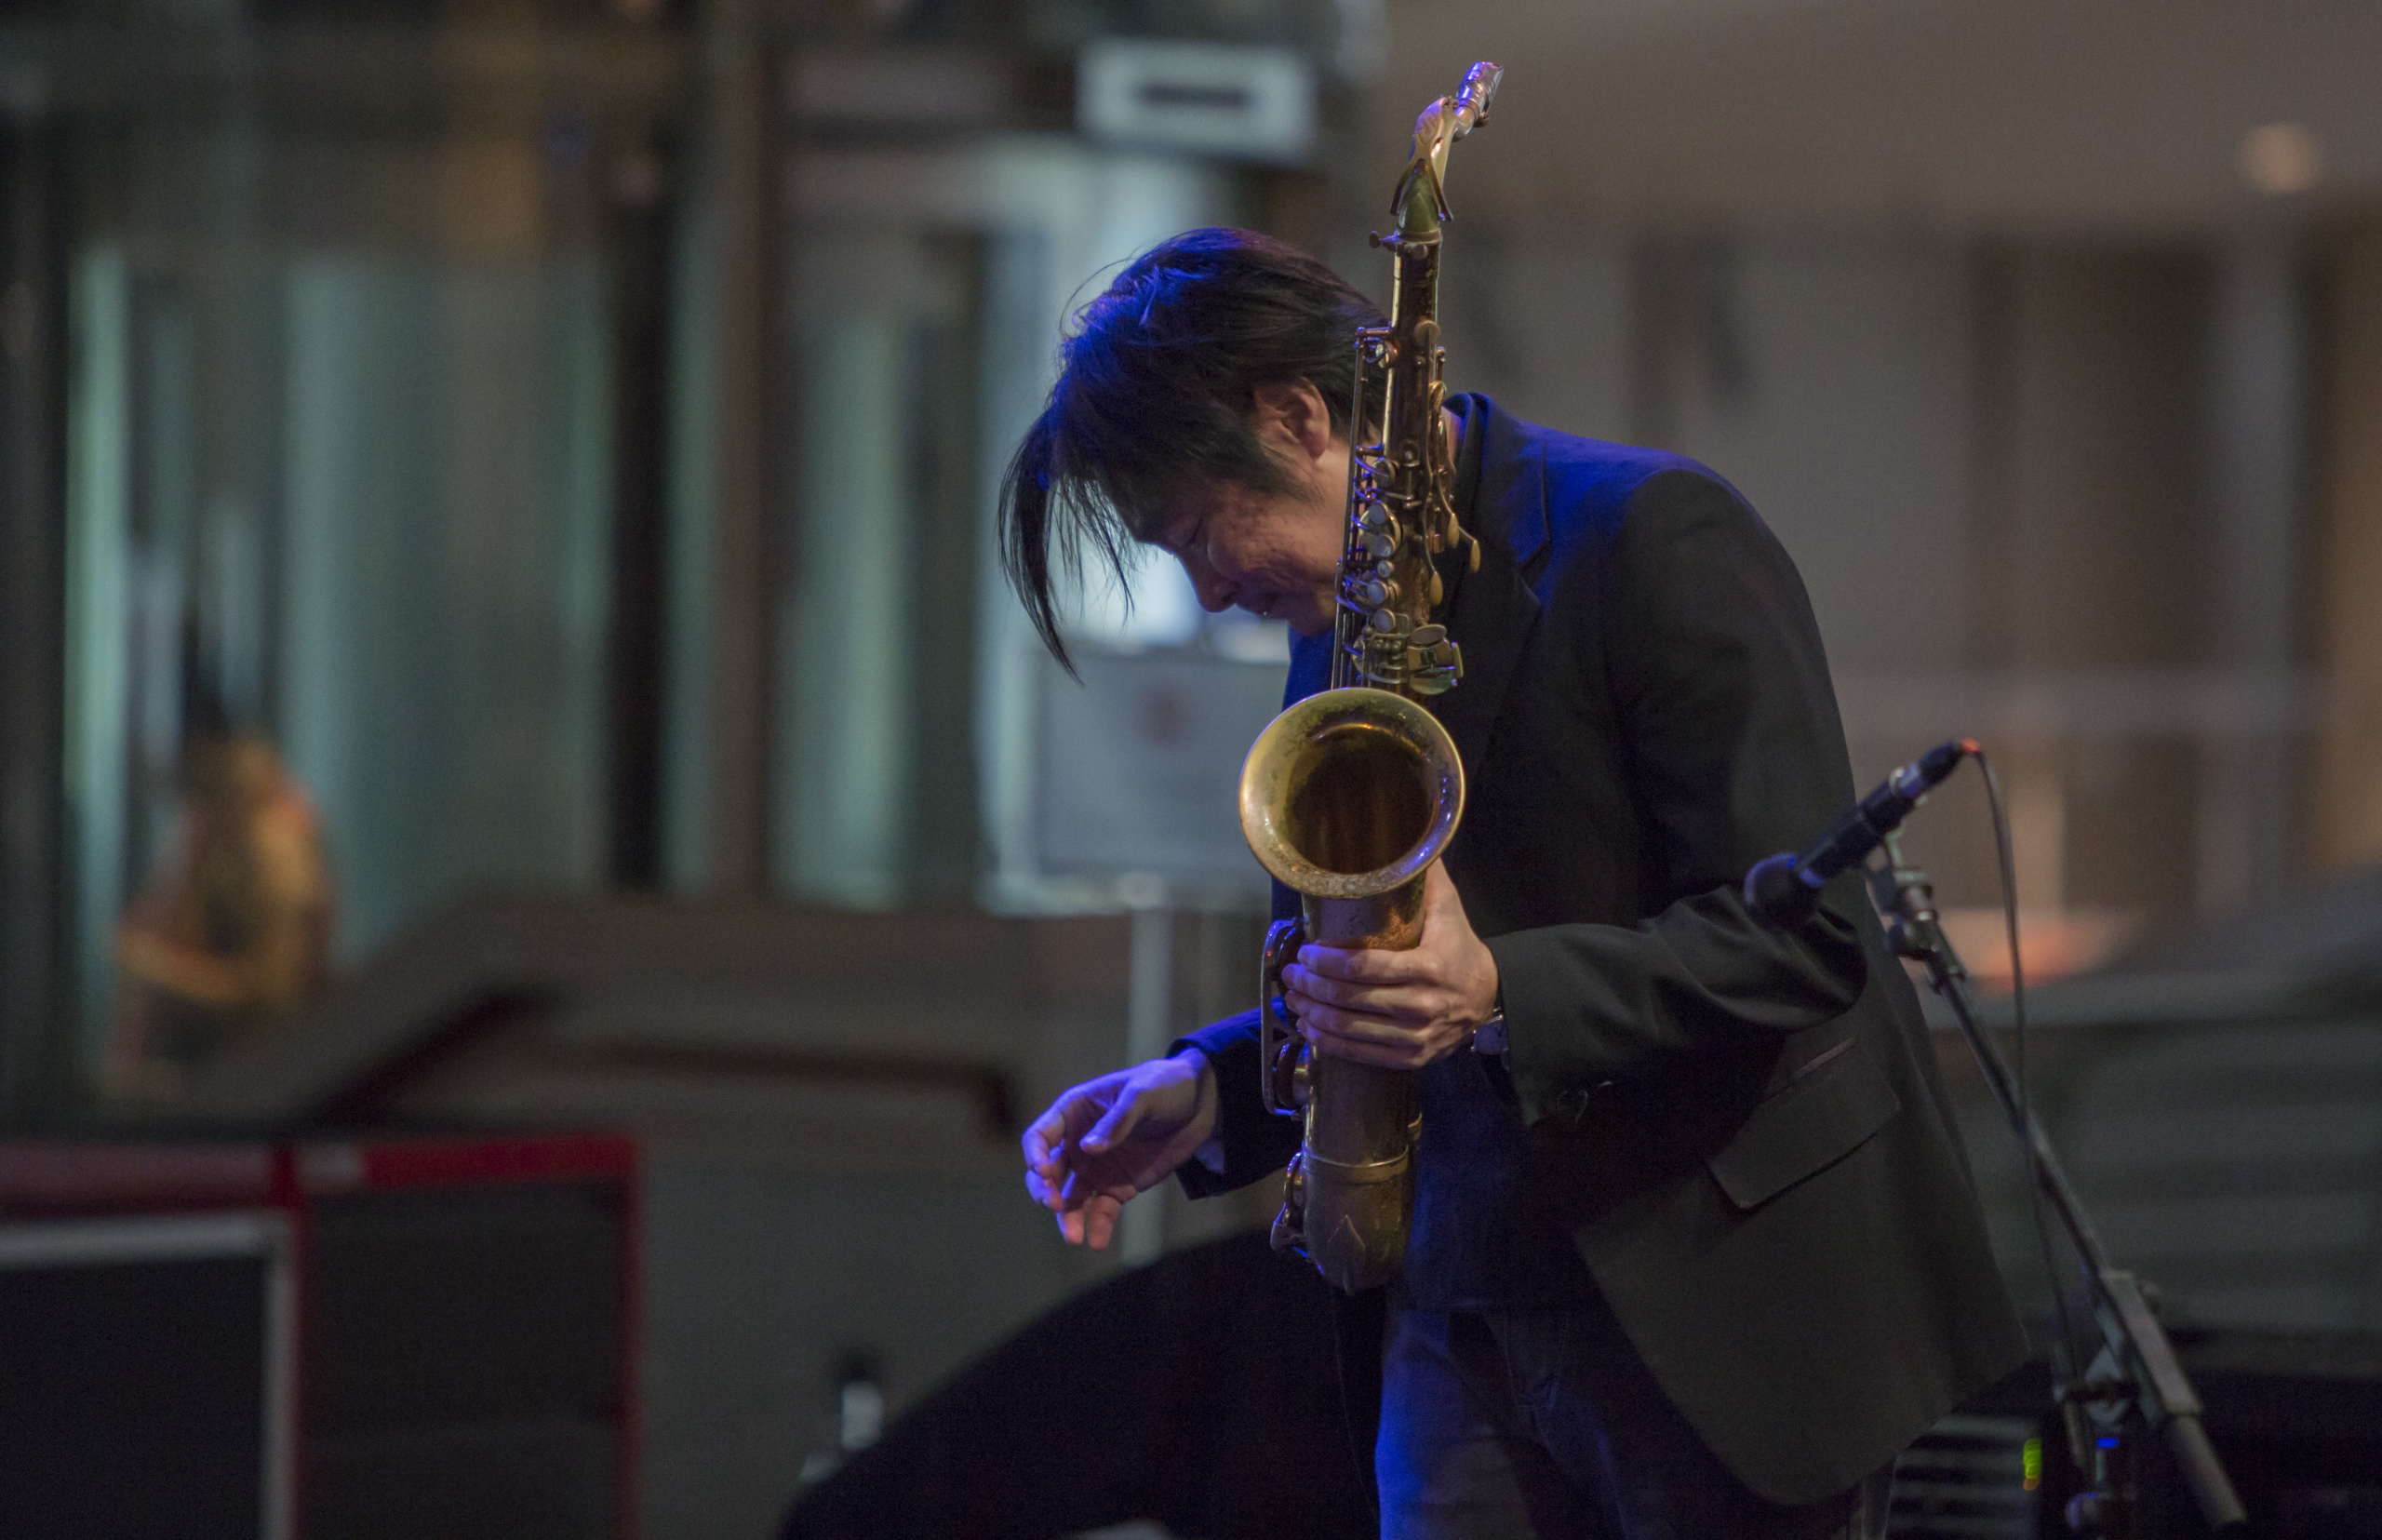 Edmund with saxophone